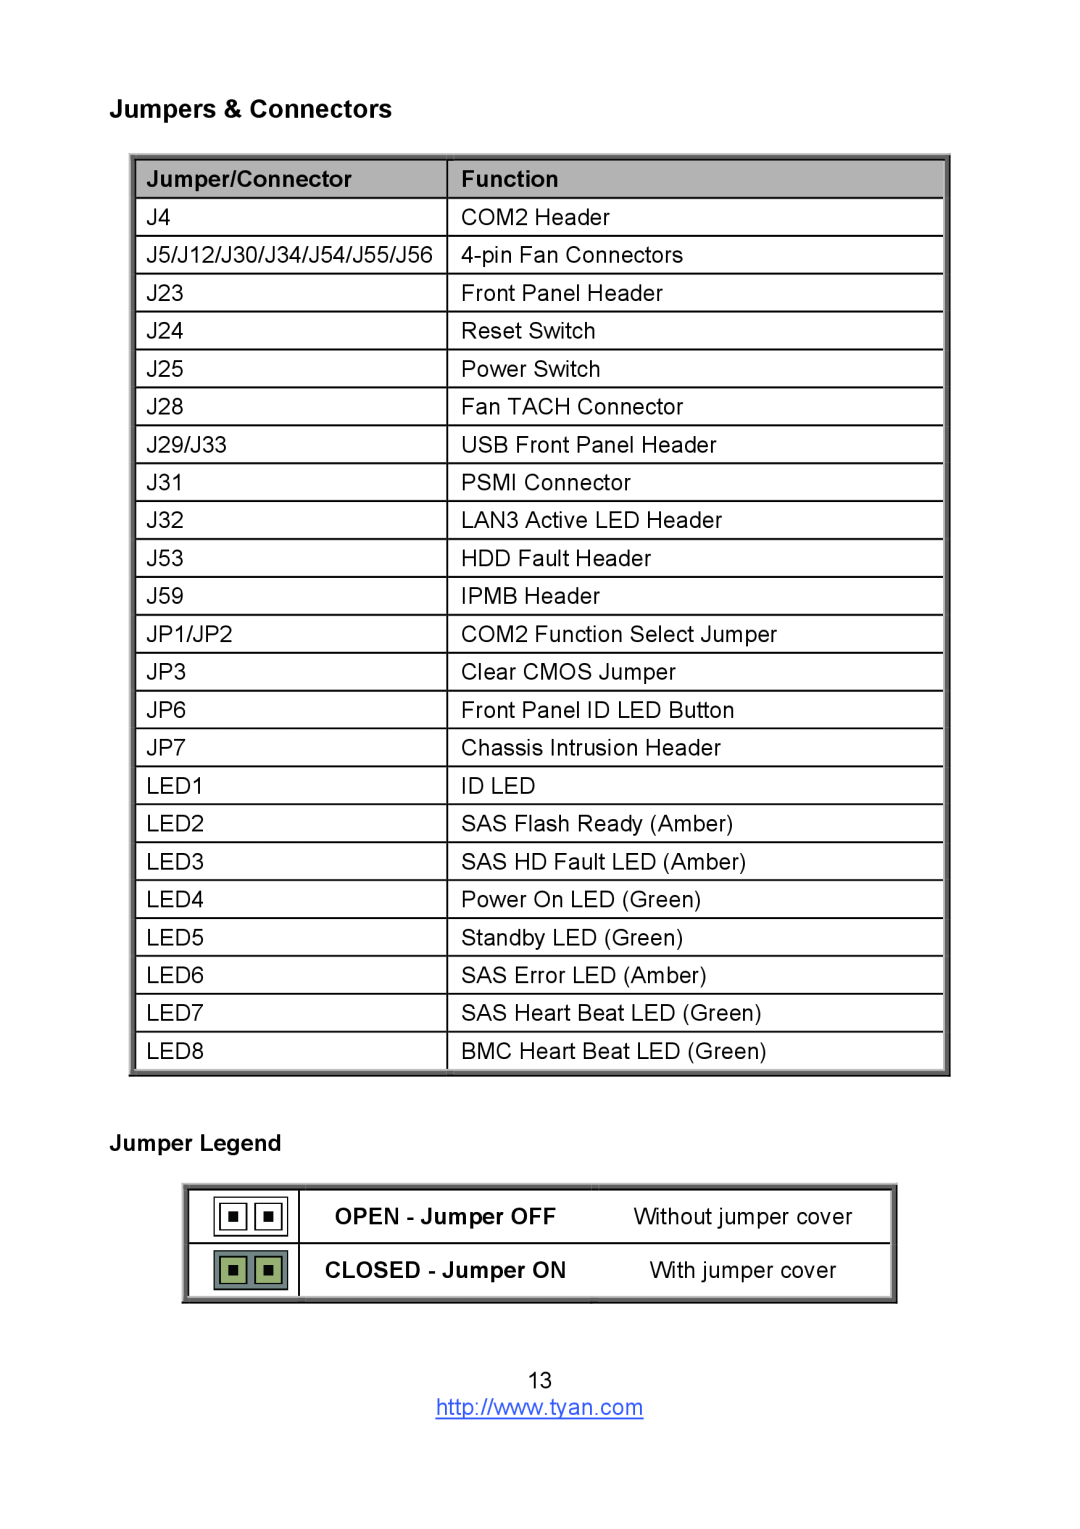 Tyan Computer S8236 Jumpers & Connectors, Jumper/Connector, Function, Jumper Legend, OPEN - Jumper OFF, CLOSED - Jumper ON 